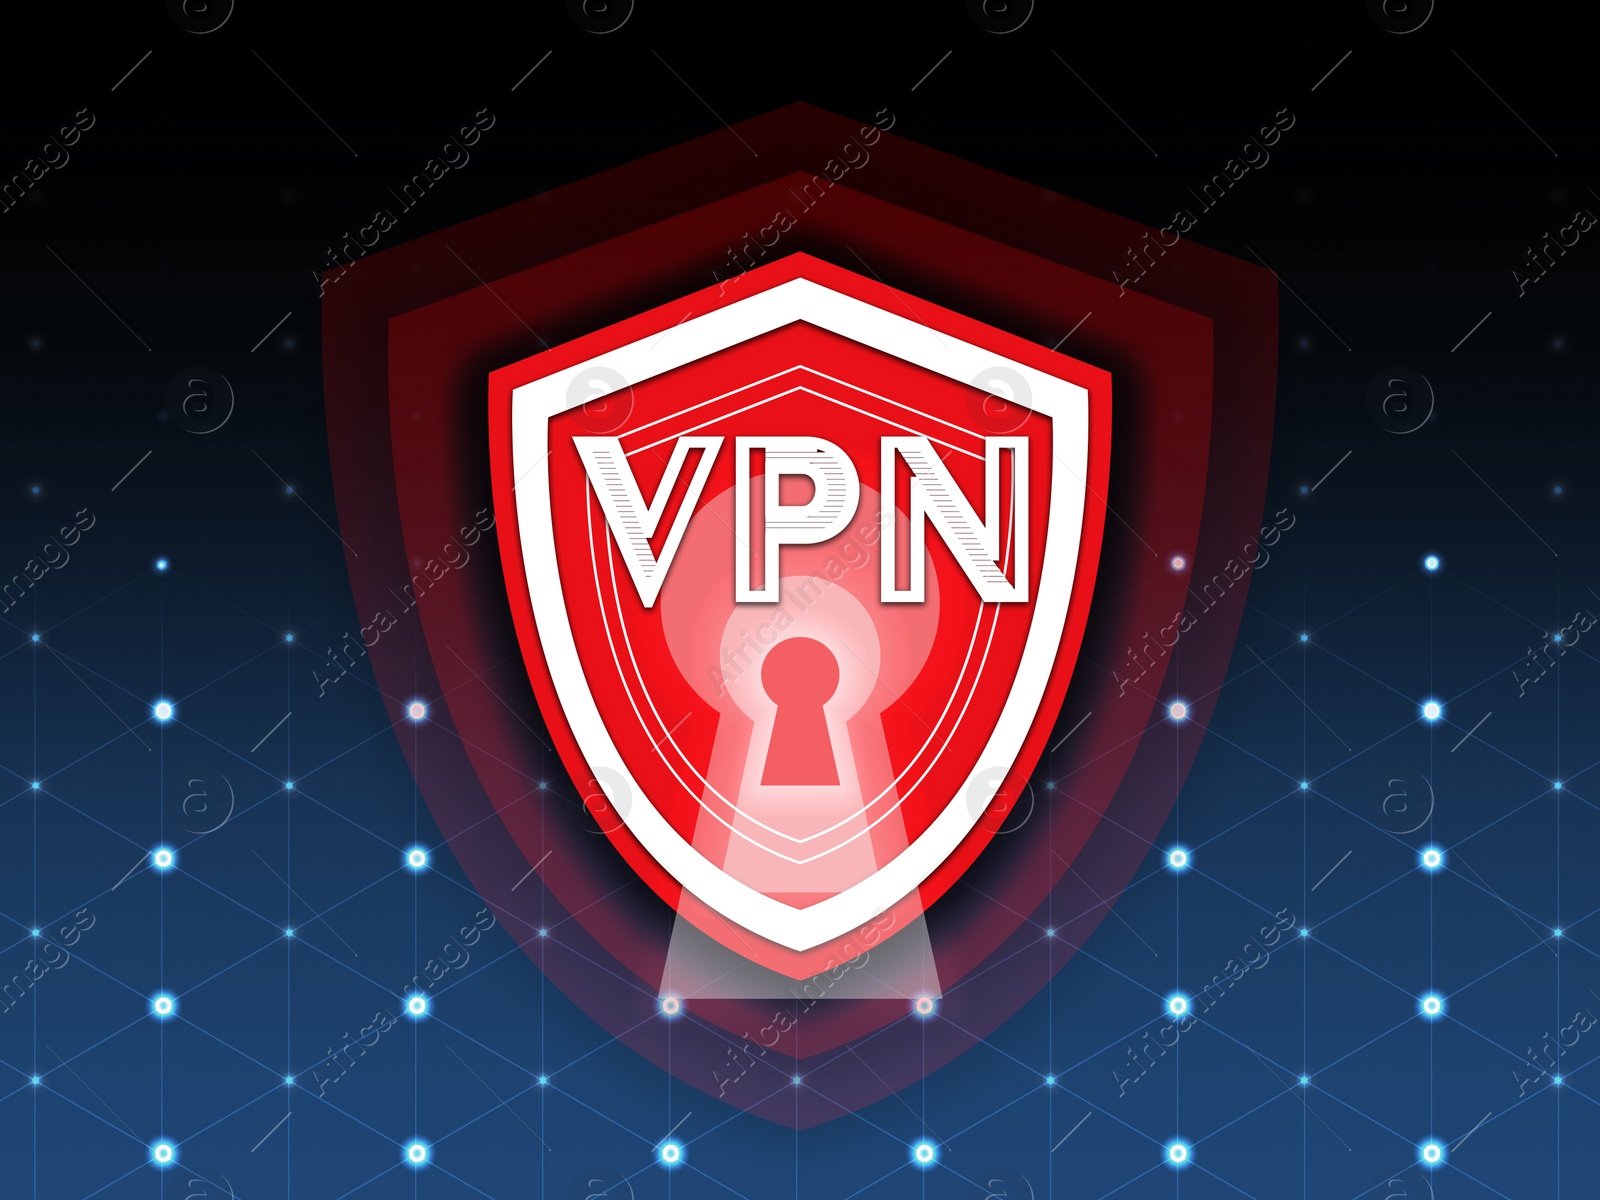 Illustration of Concept of secure network connection. Acronym VPN on color background, illustration